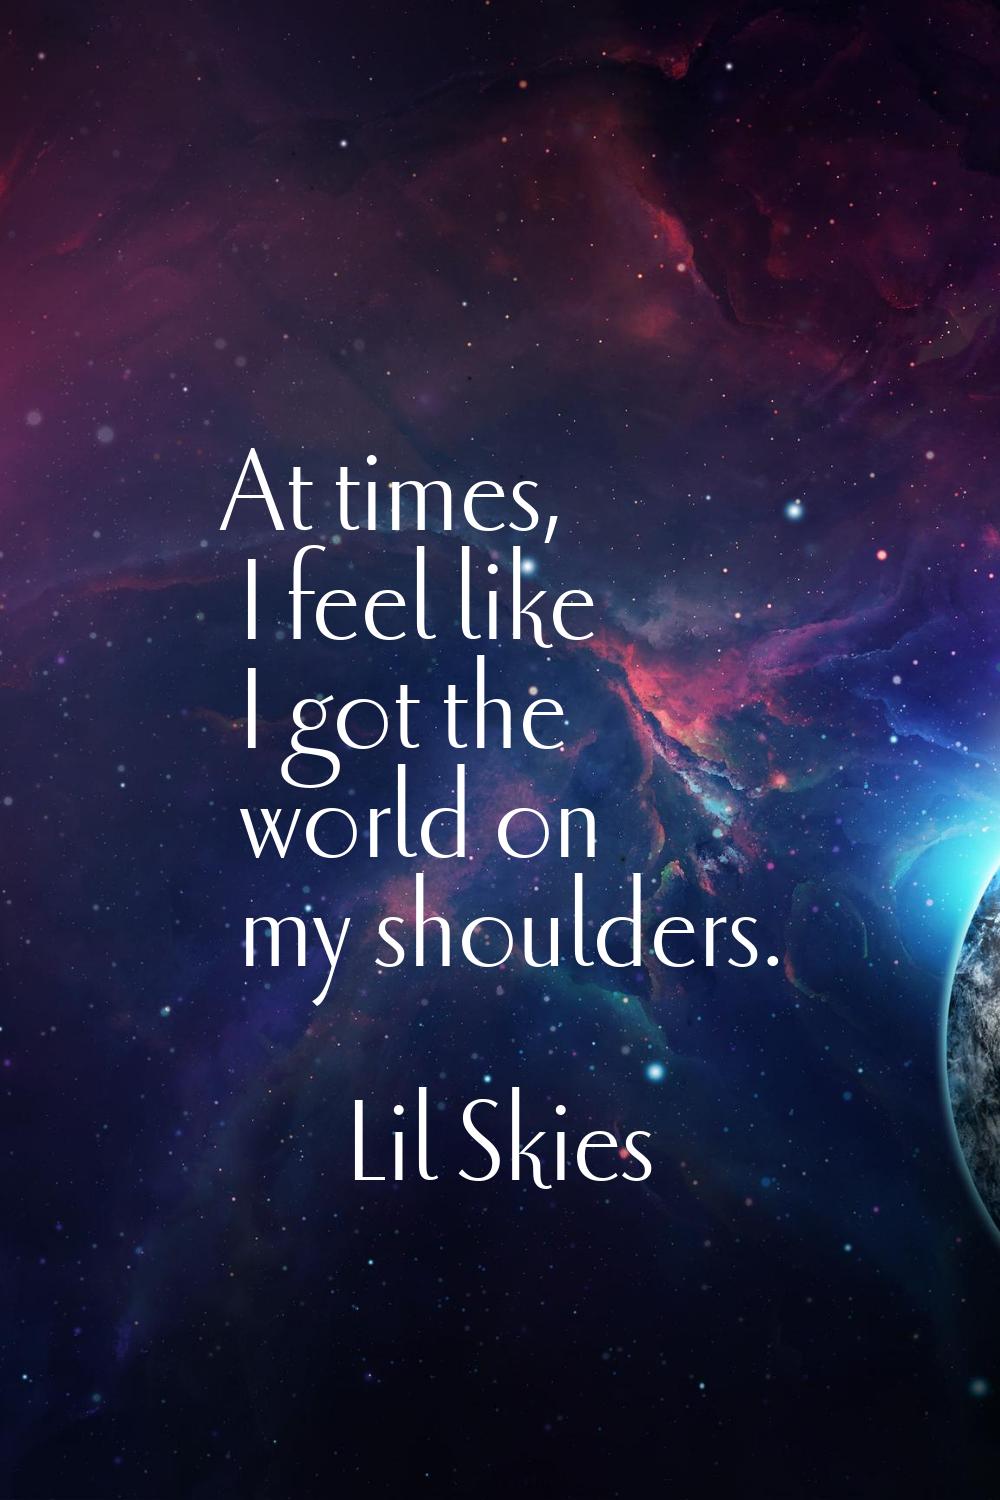 At times, I feel like I got the world on my shoulders.